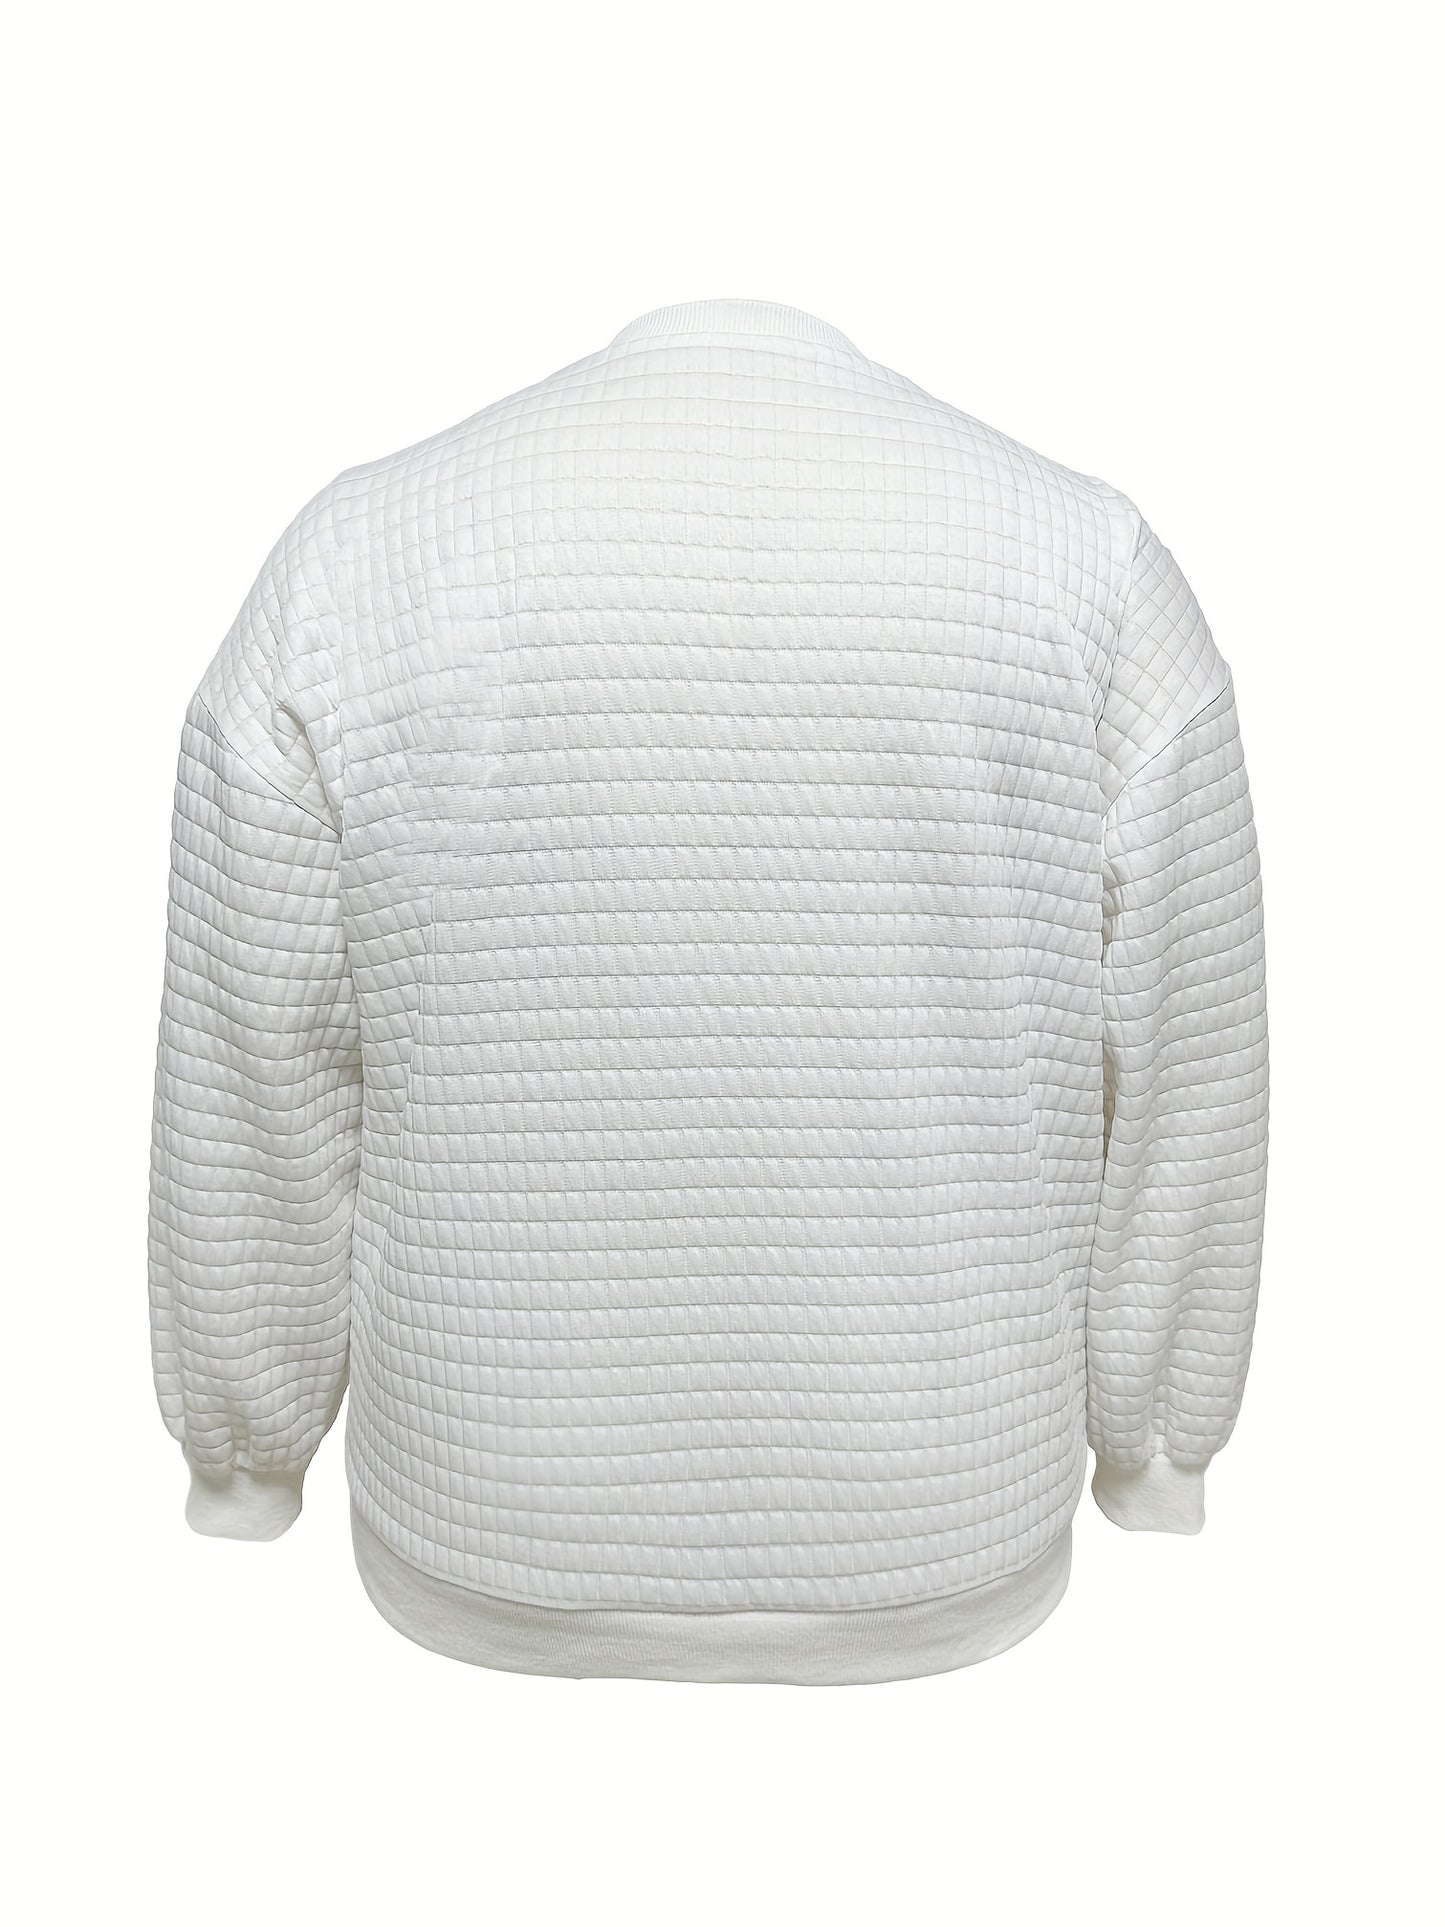 Plus Size Casual Sweatshirt, Women's Plus Solid Letter Patch Waffle Pattern Long Sleeve Round Neck Sweatshirt